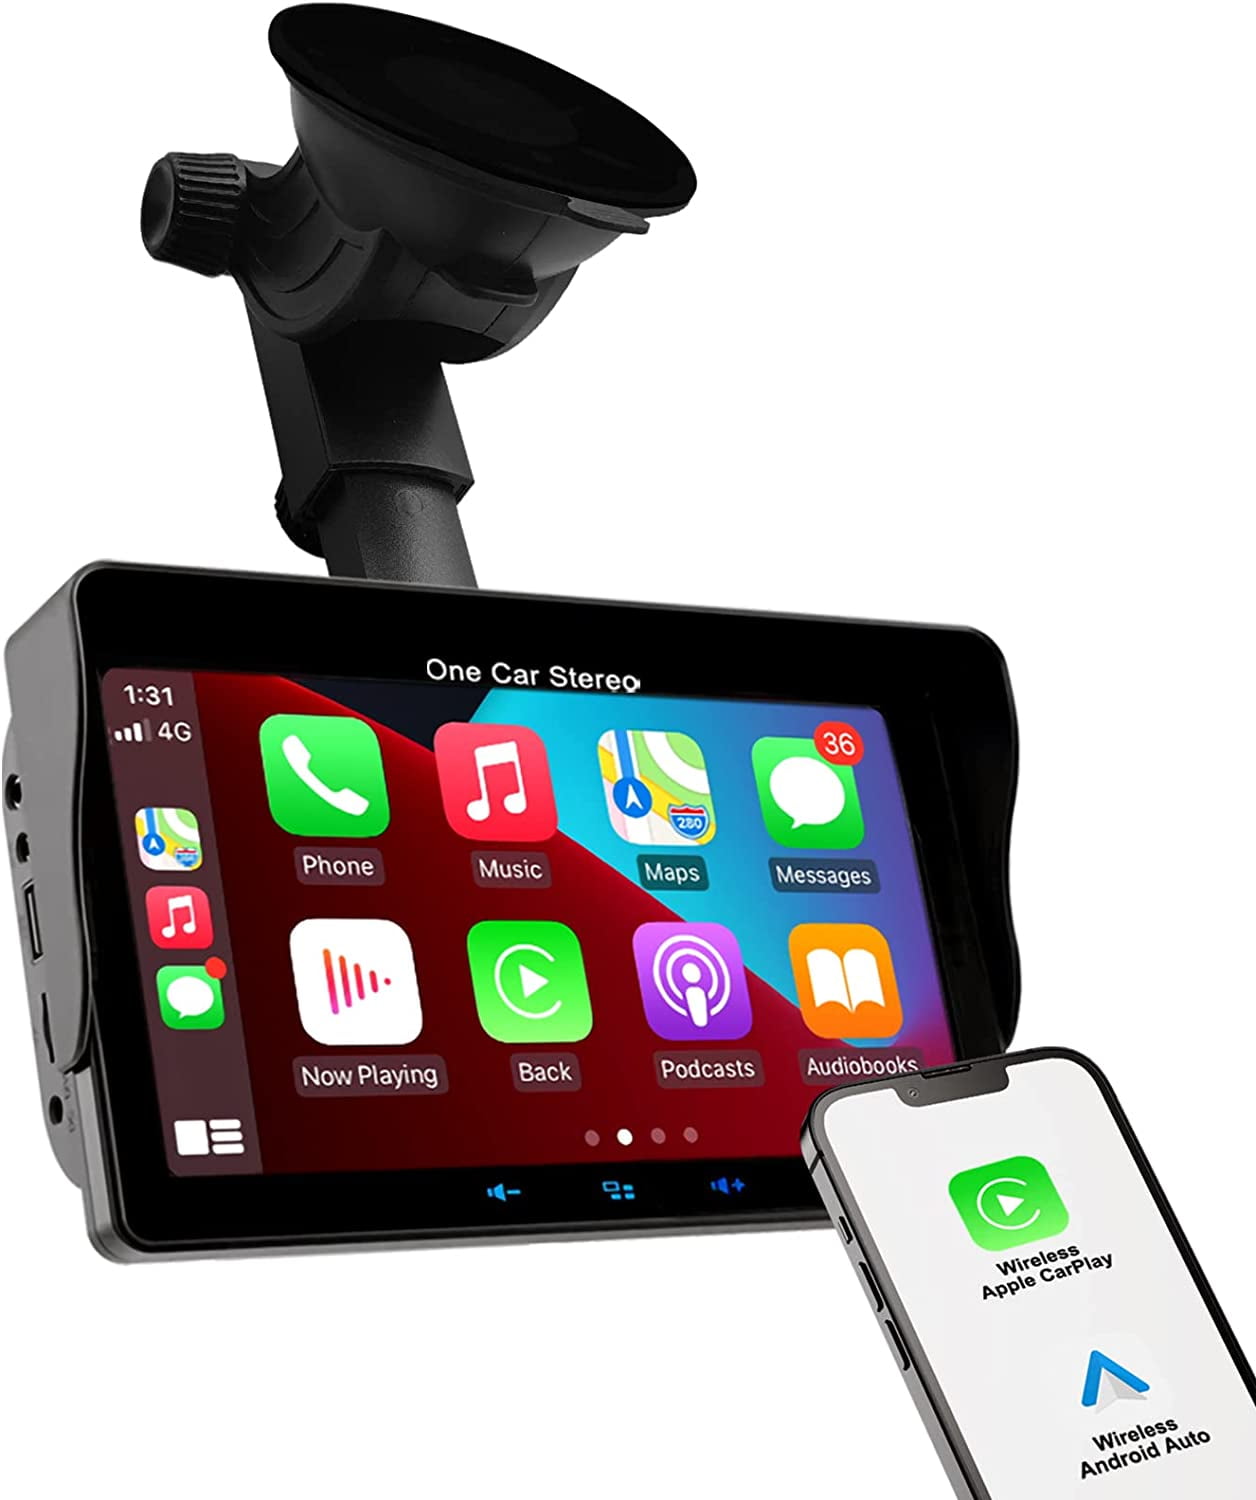 CarPlay Car Radio Multimedia 7 Screen For Universal Stereo Player GPS  Android Auto 2Din Autoradio Vehicle Drive Play Pro Auto